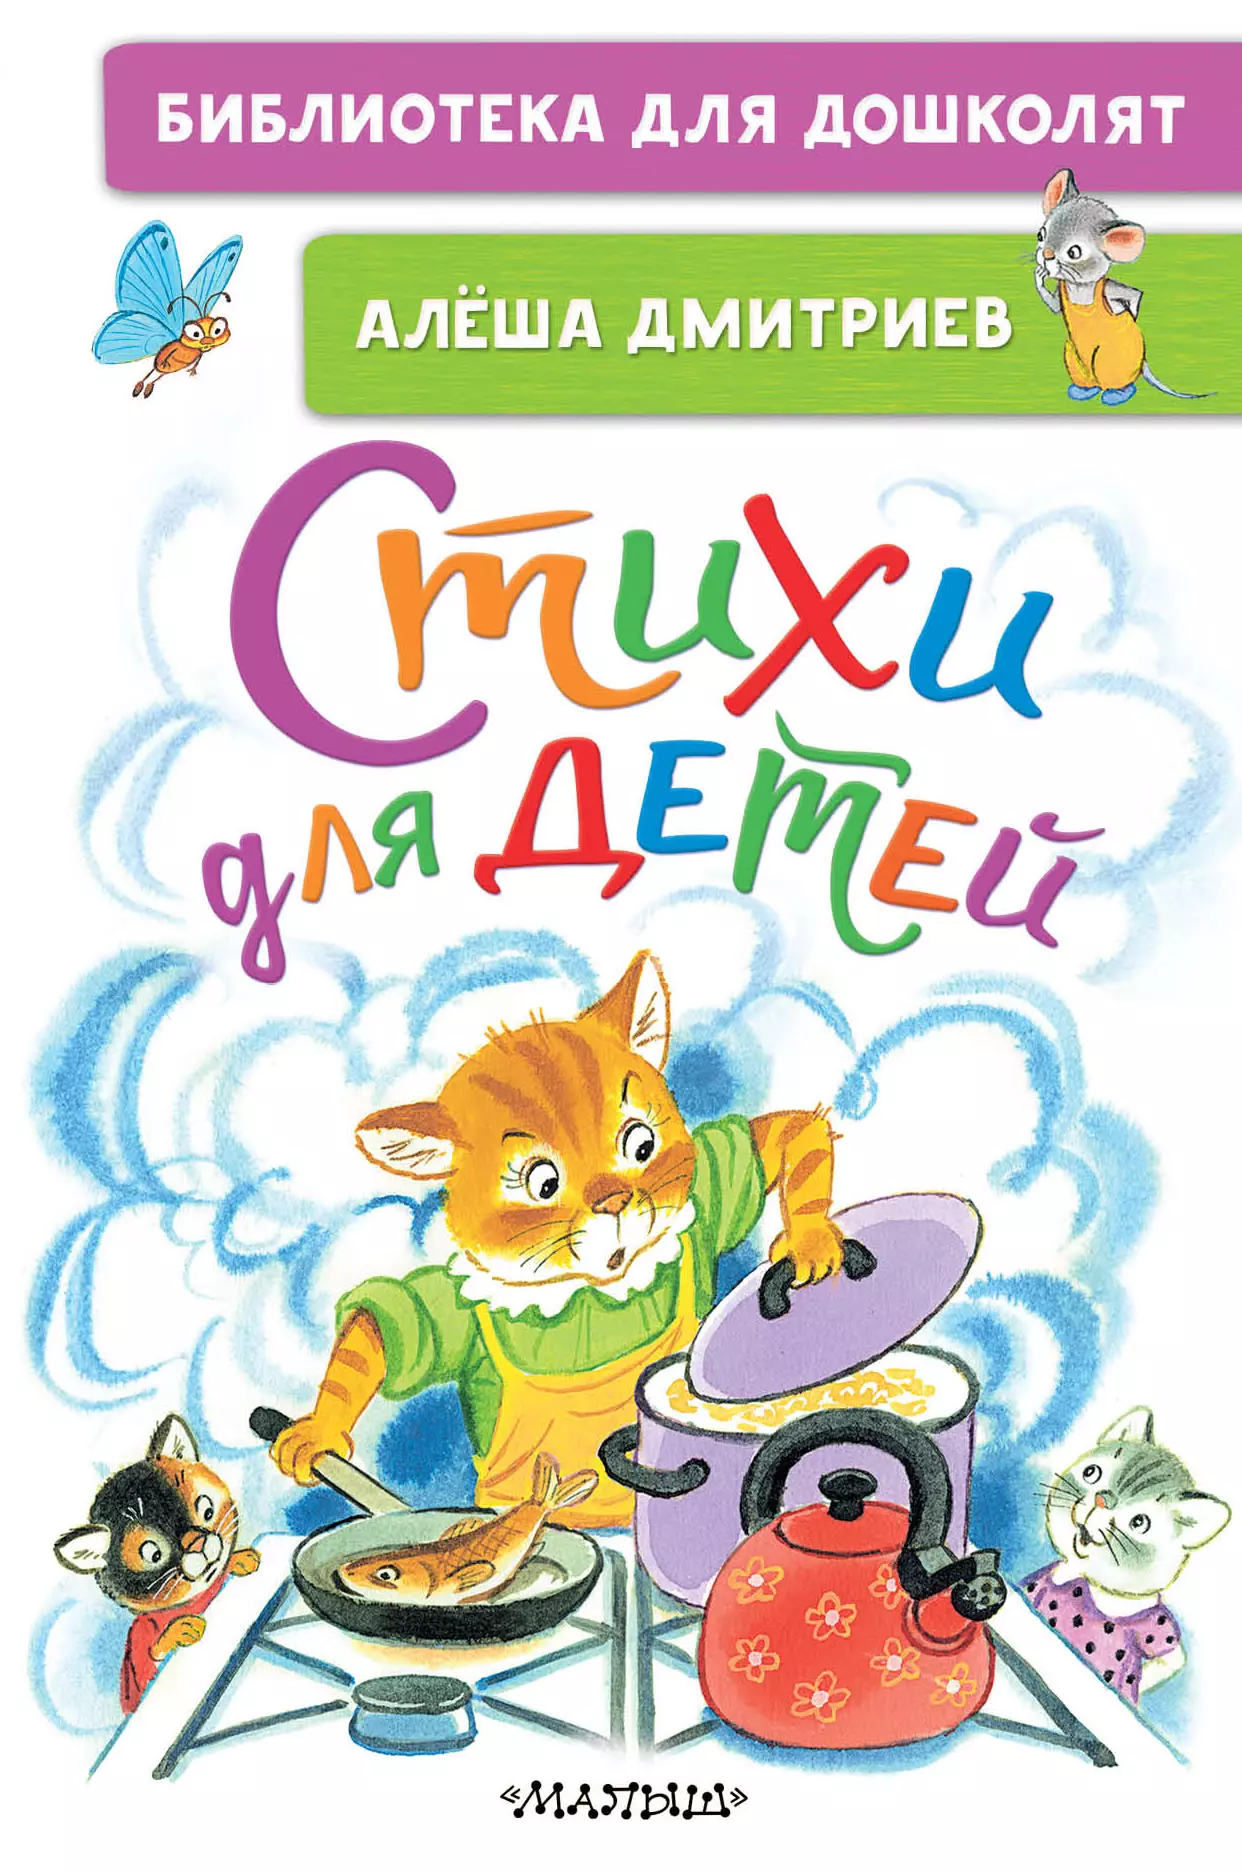 Дмитриев Алеша Стихи для детей